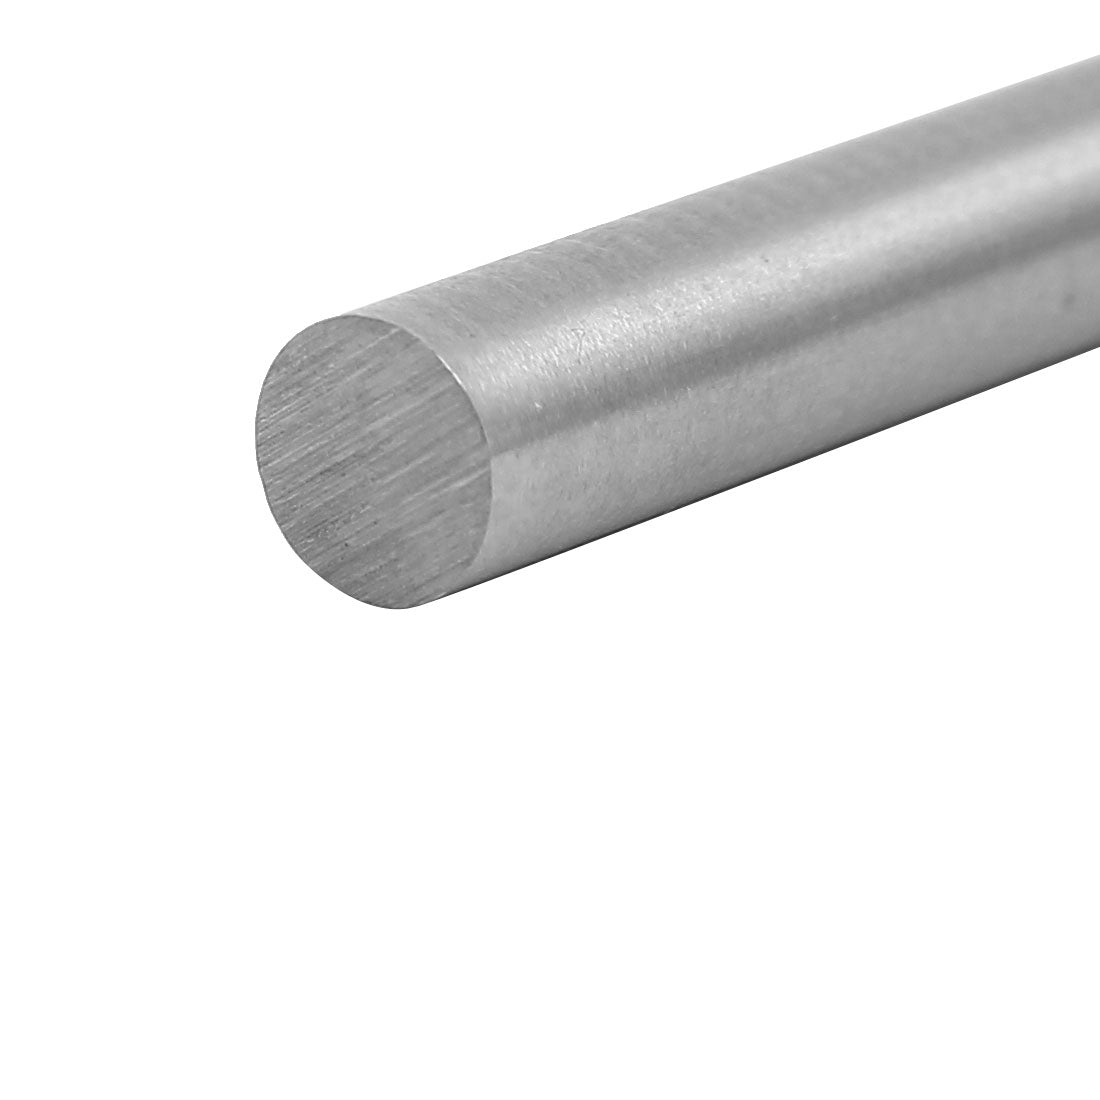 Uxcell Uxcell 7.5mm Dia 100mm Length HSS Round Shaft Rod Bar Lathe Tools Gray 5pcs